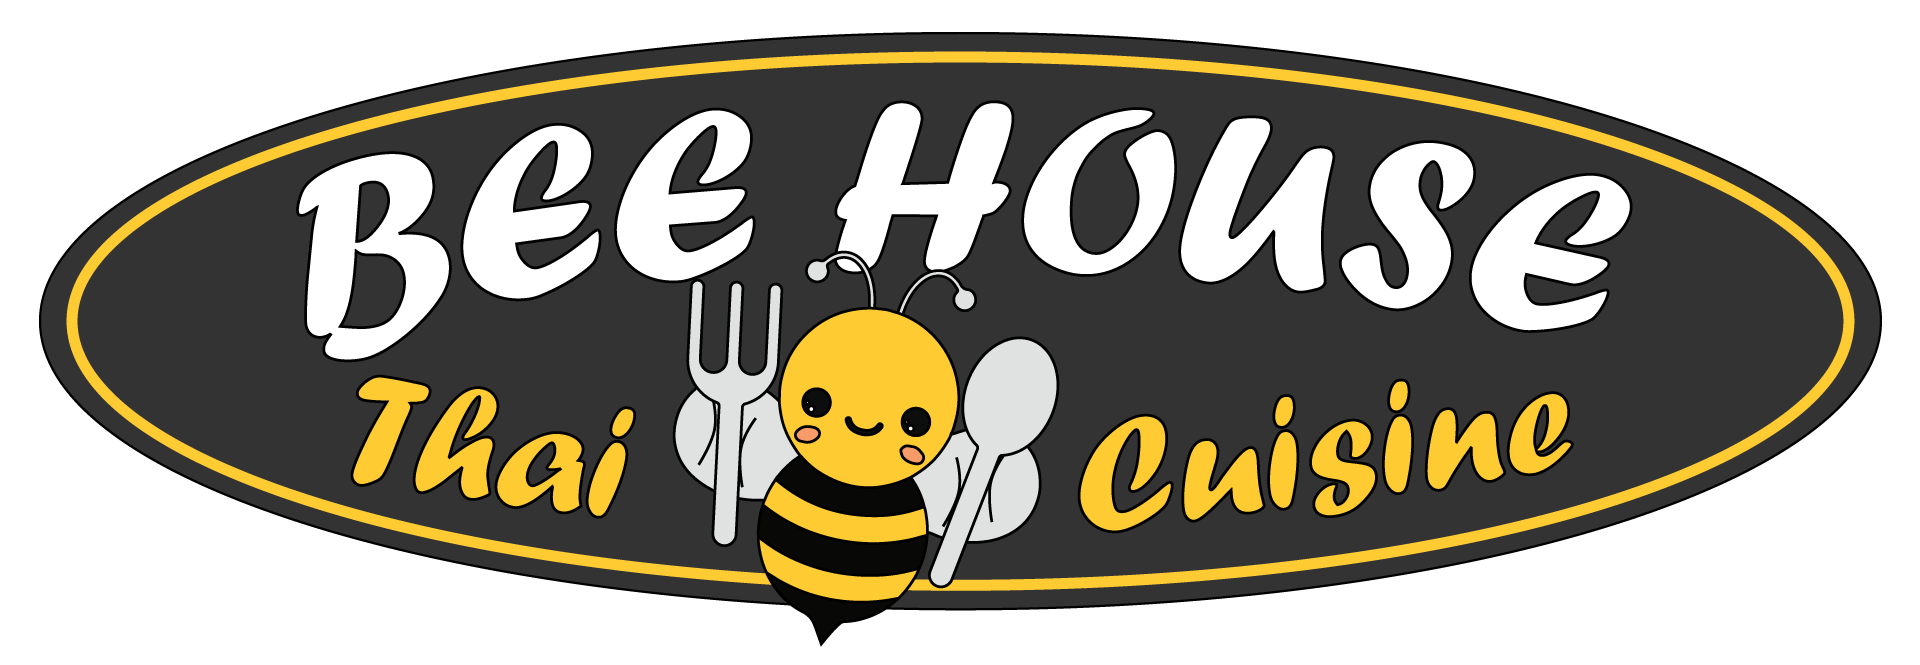 The Bee House Thai Cuisine 245 West Grand Ave.